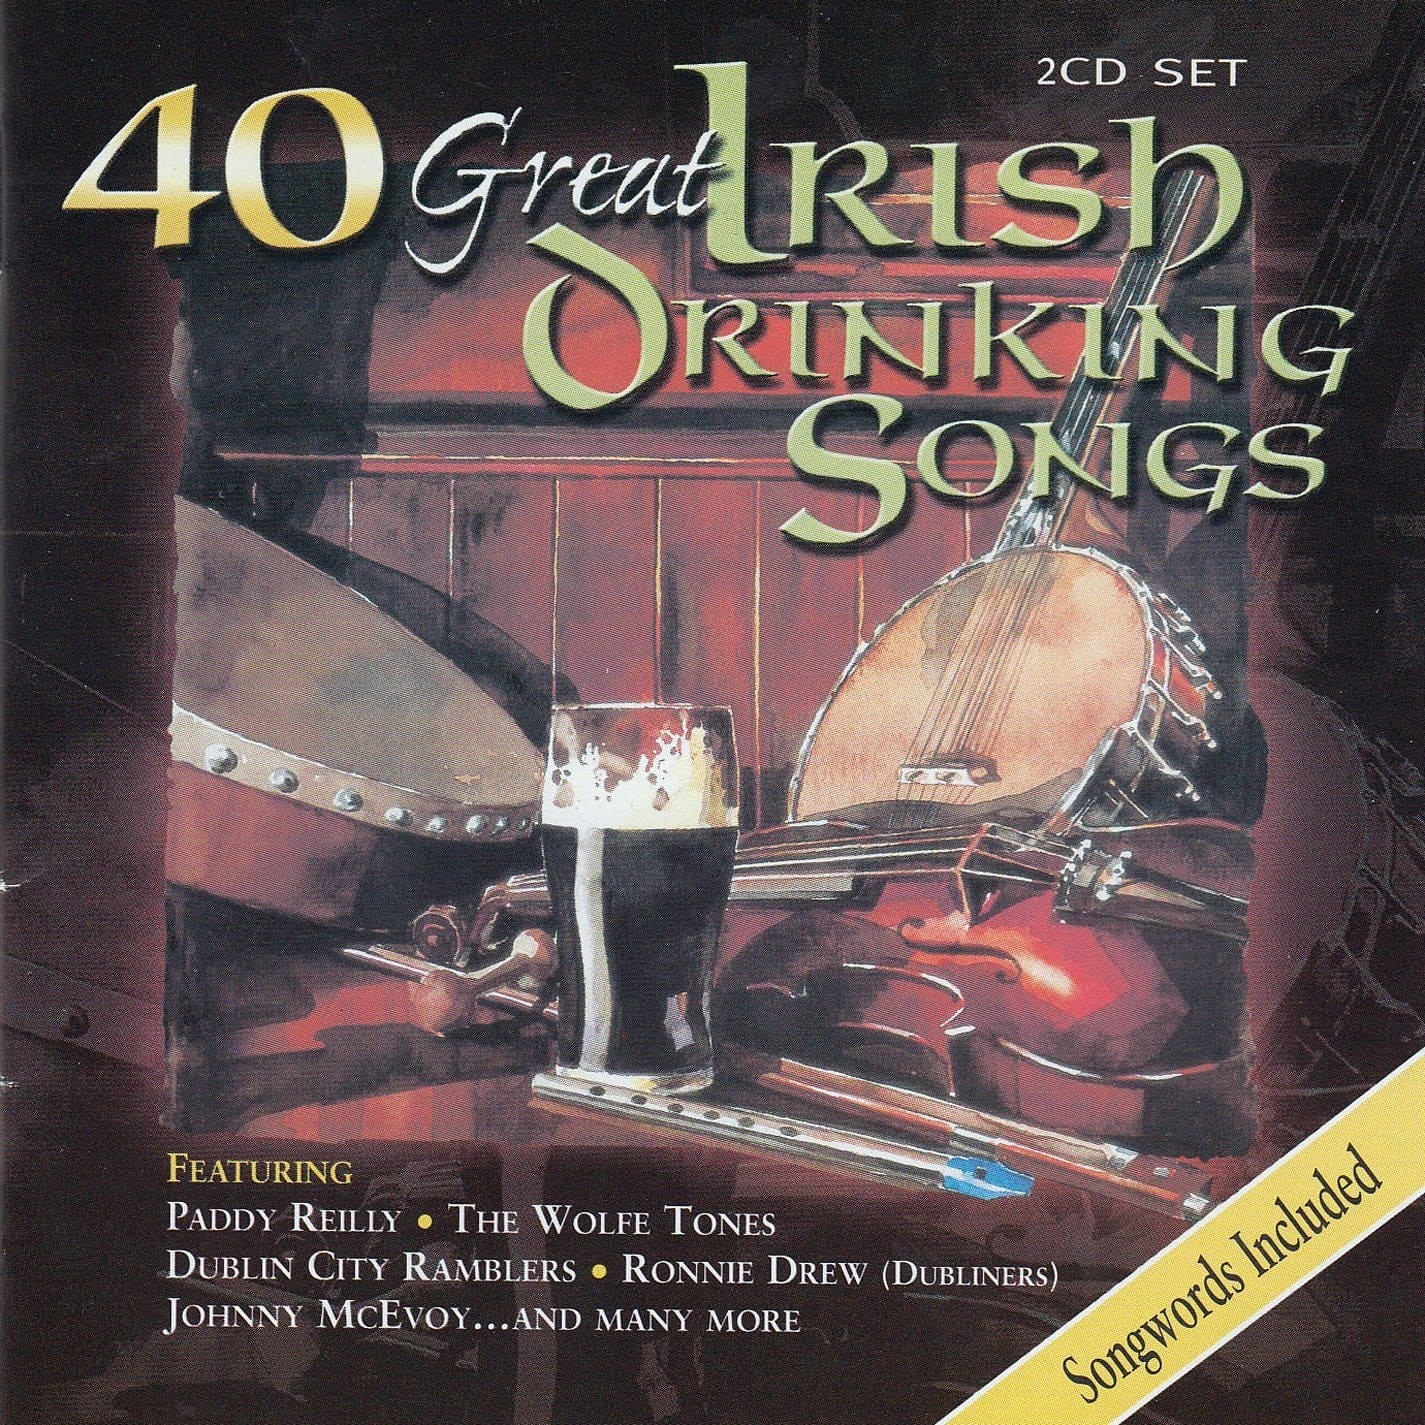 40 Great Irish Drinking Songs - Various Artists [2CD]